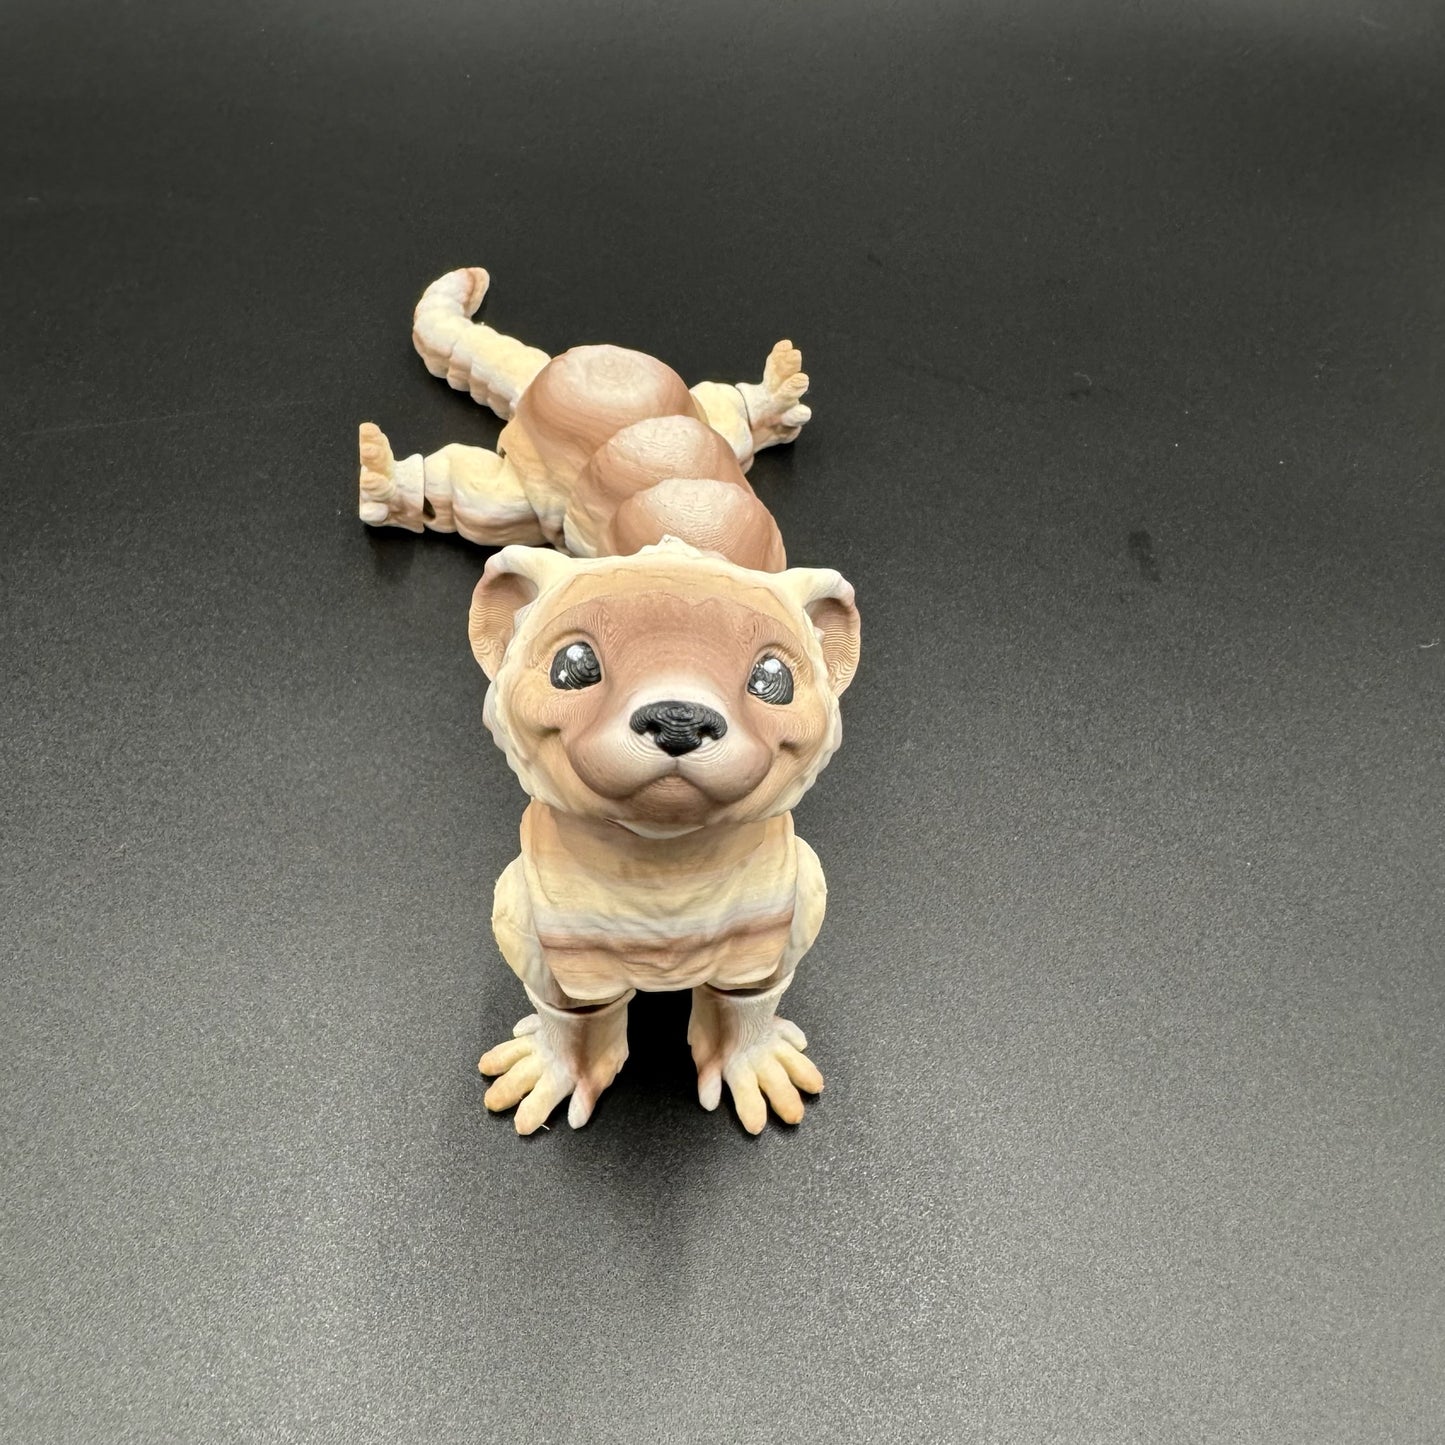 3D Printed Ferret